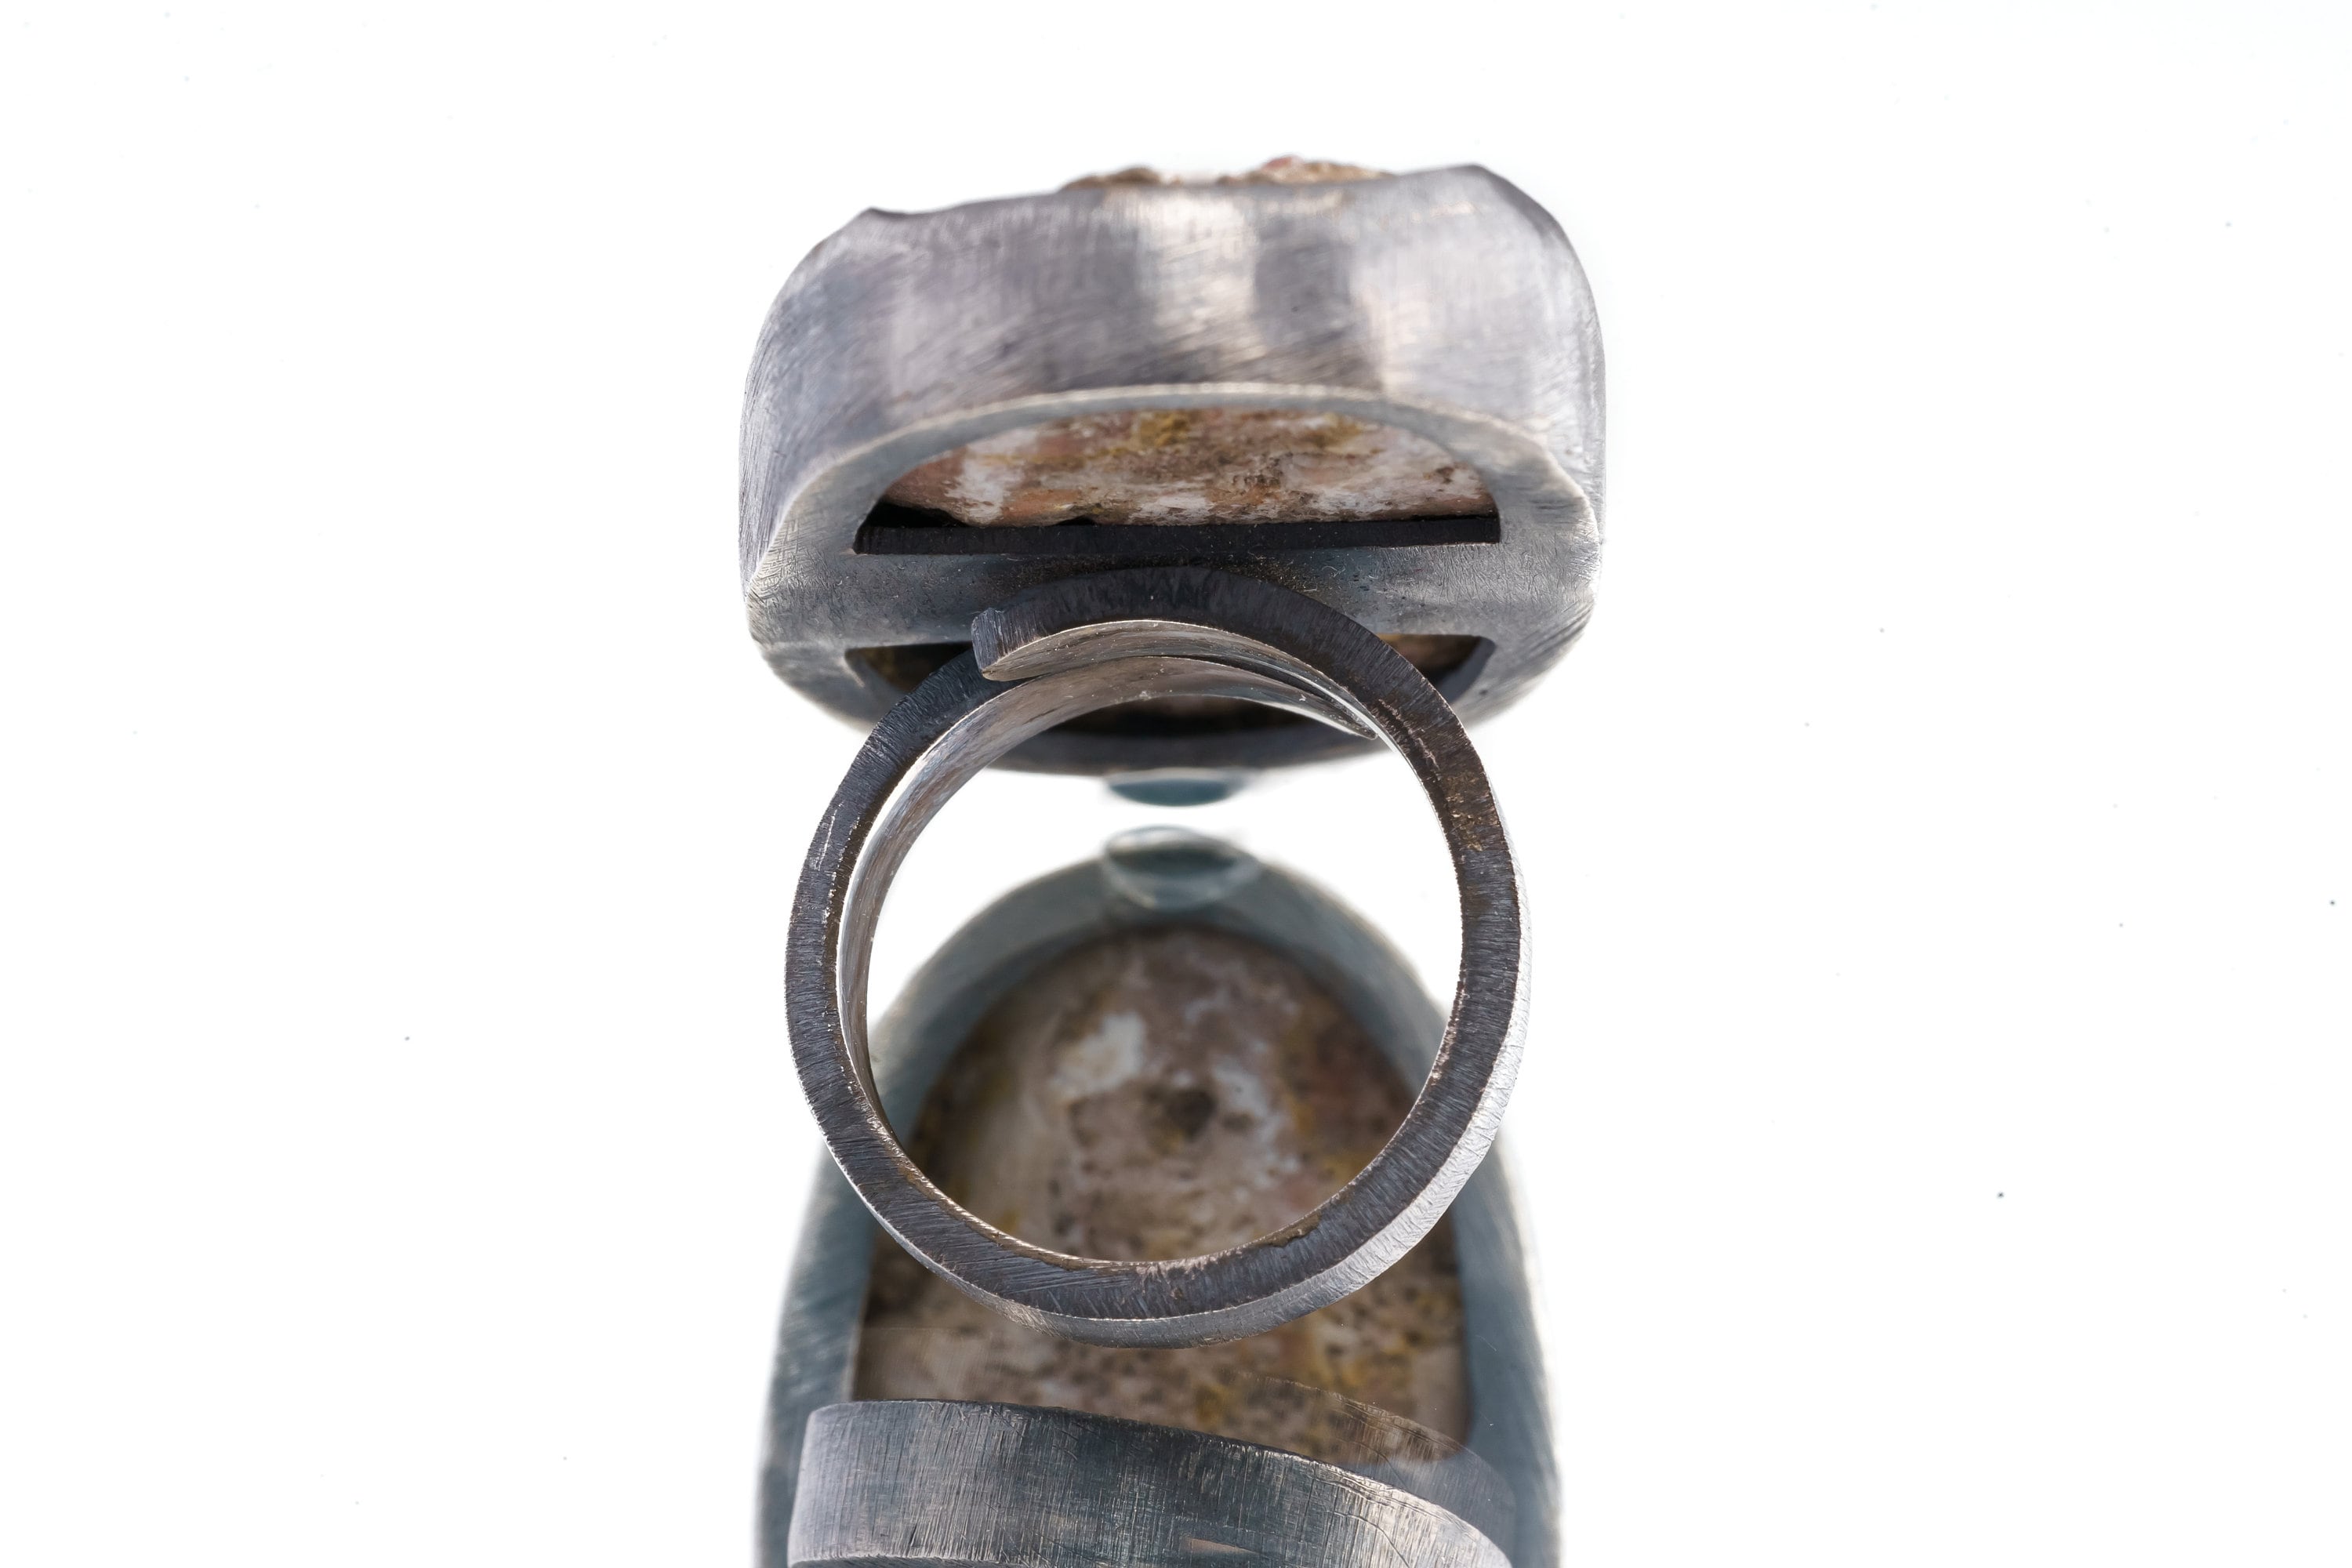 Big Raw Gem Garnet and calcite on Matrix - Brushed & Oxidised - 925 Sterling Silver - Heavy Set Adjustable Textured Ring - Size 5-10 US